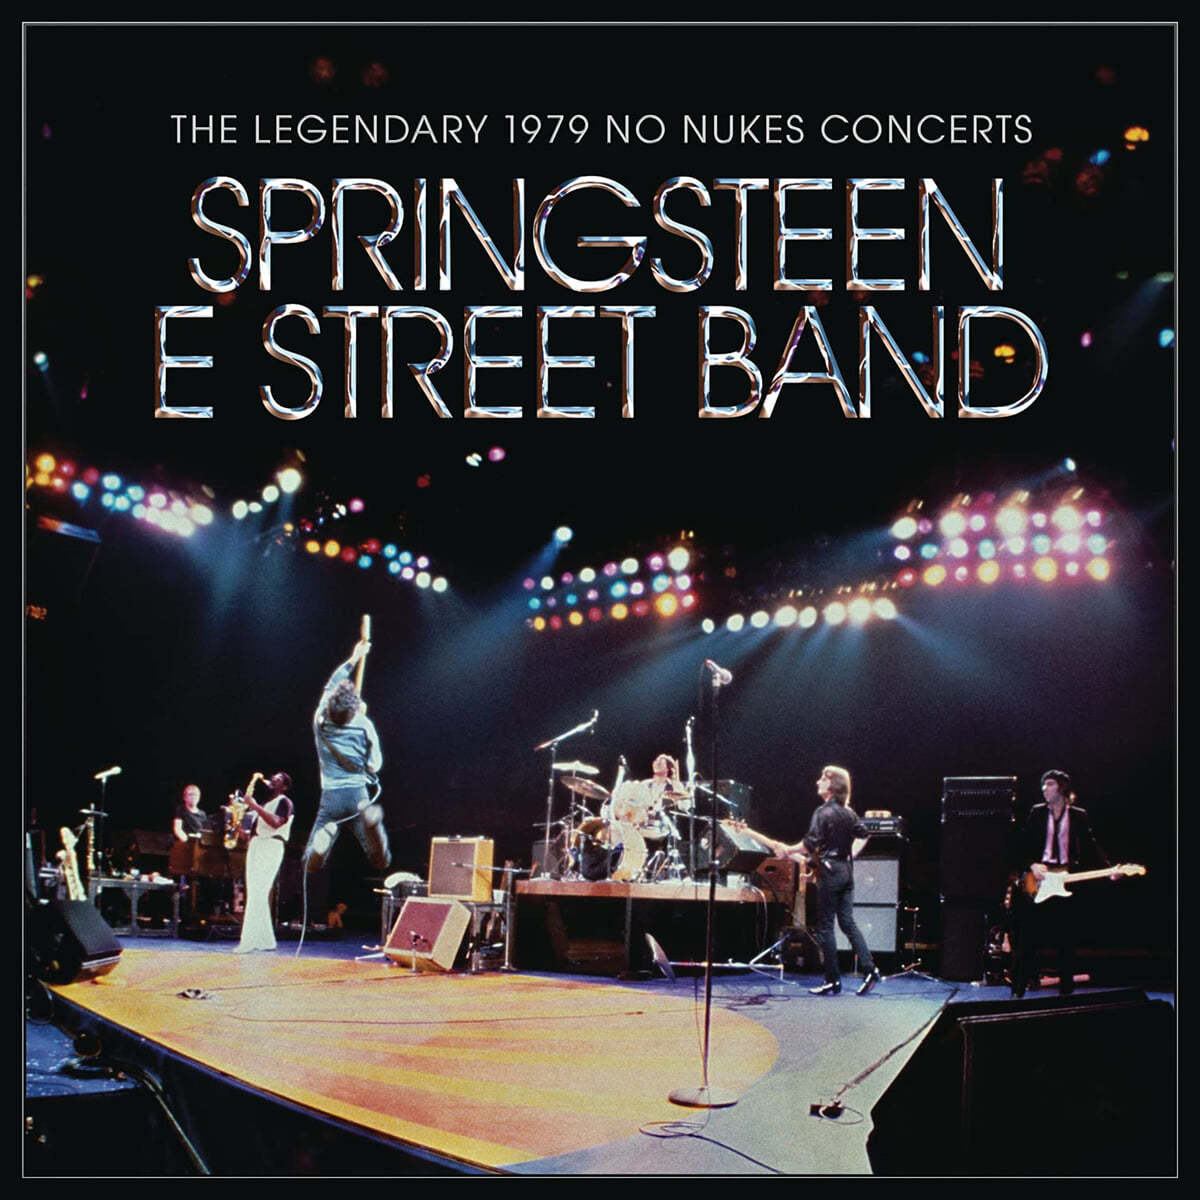 Bruce Springsteen / The E Street Band (브루스 스프링스틴 / 이 스트릿 밴드) - The Legendary 1979 No Nukes Concerts [2LP] 